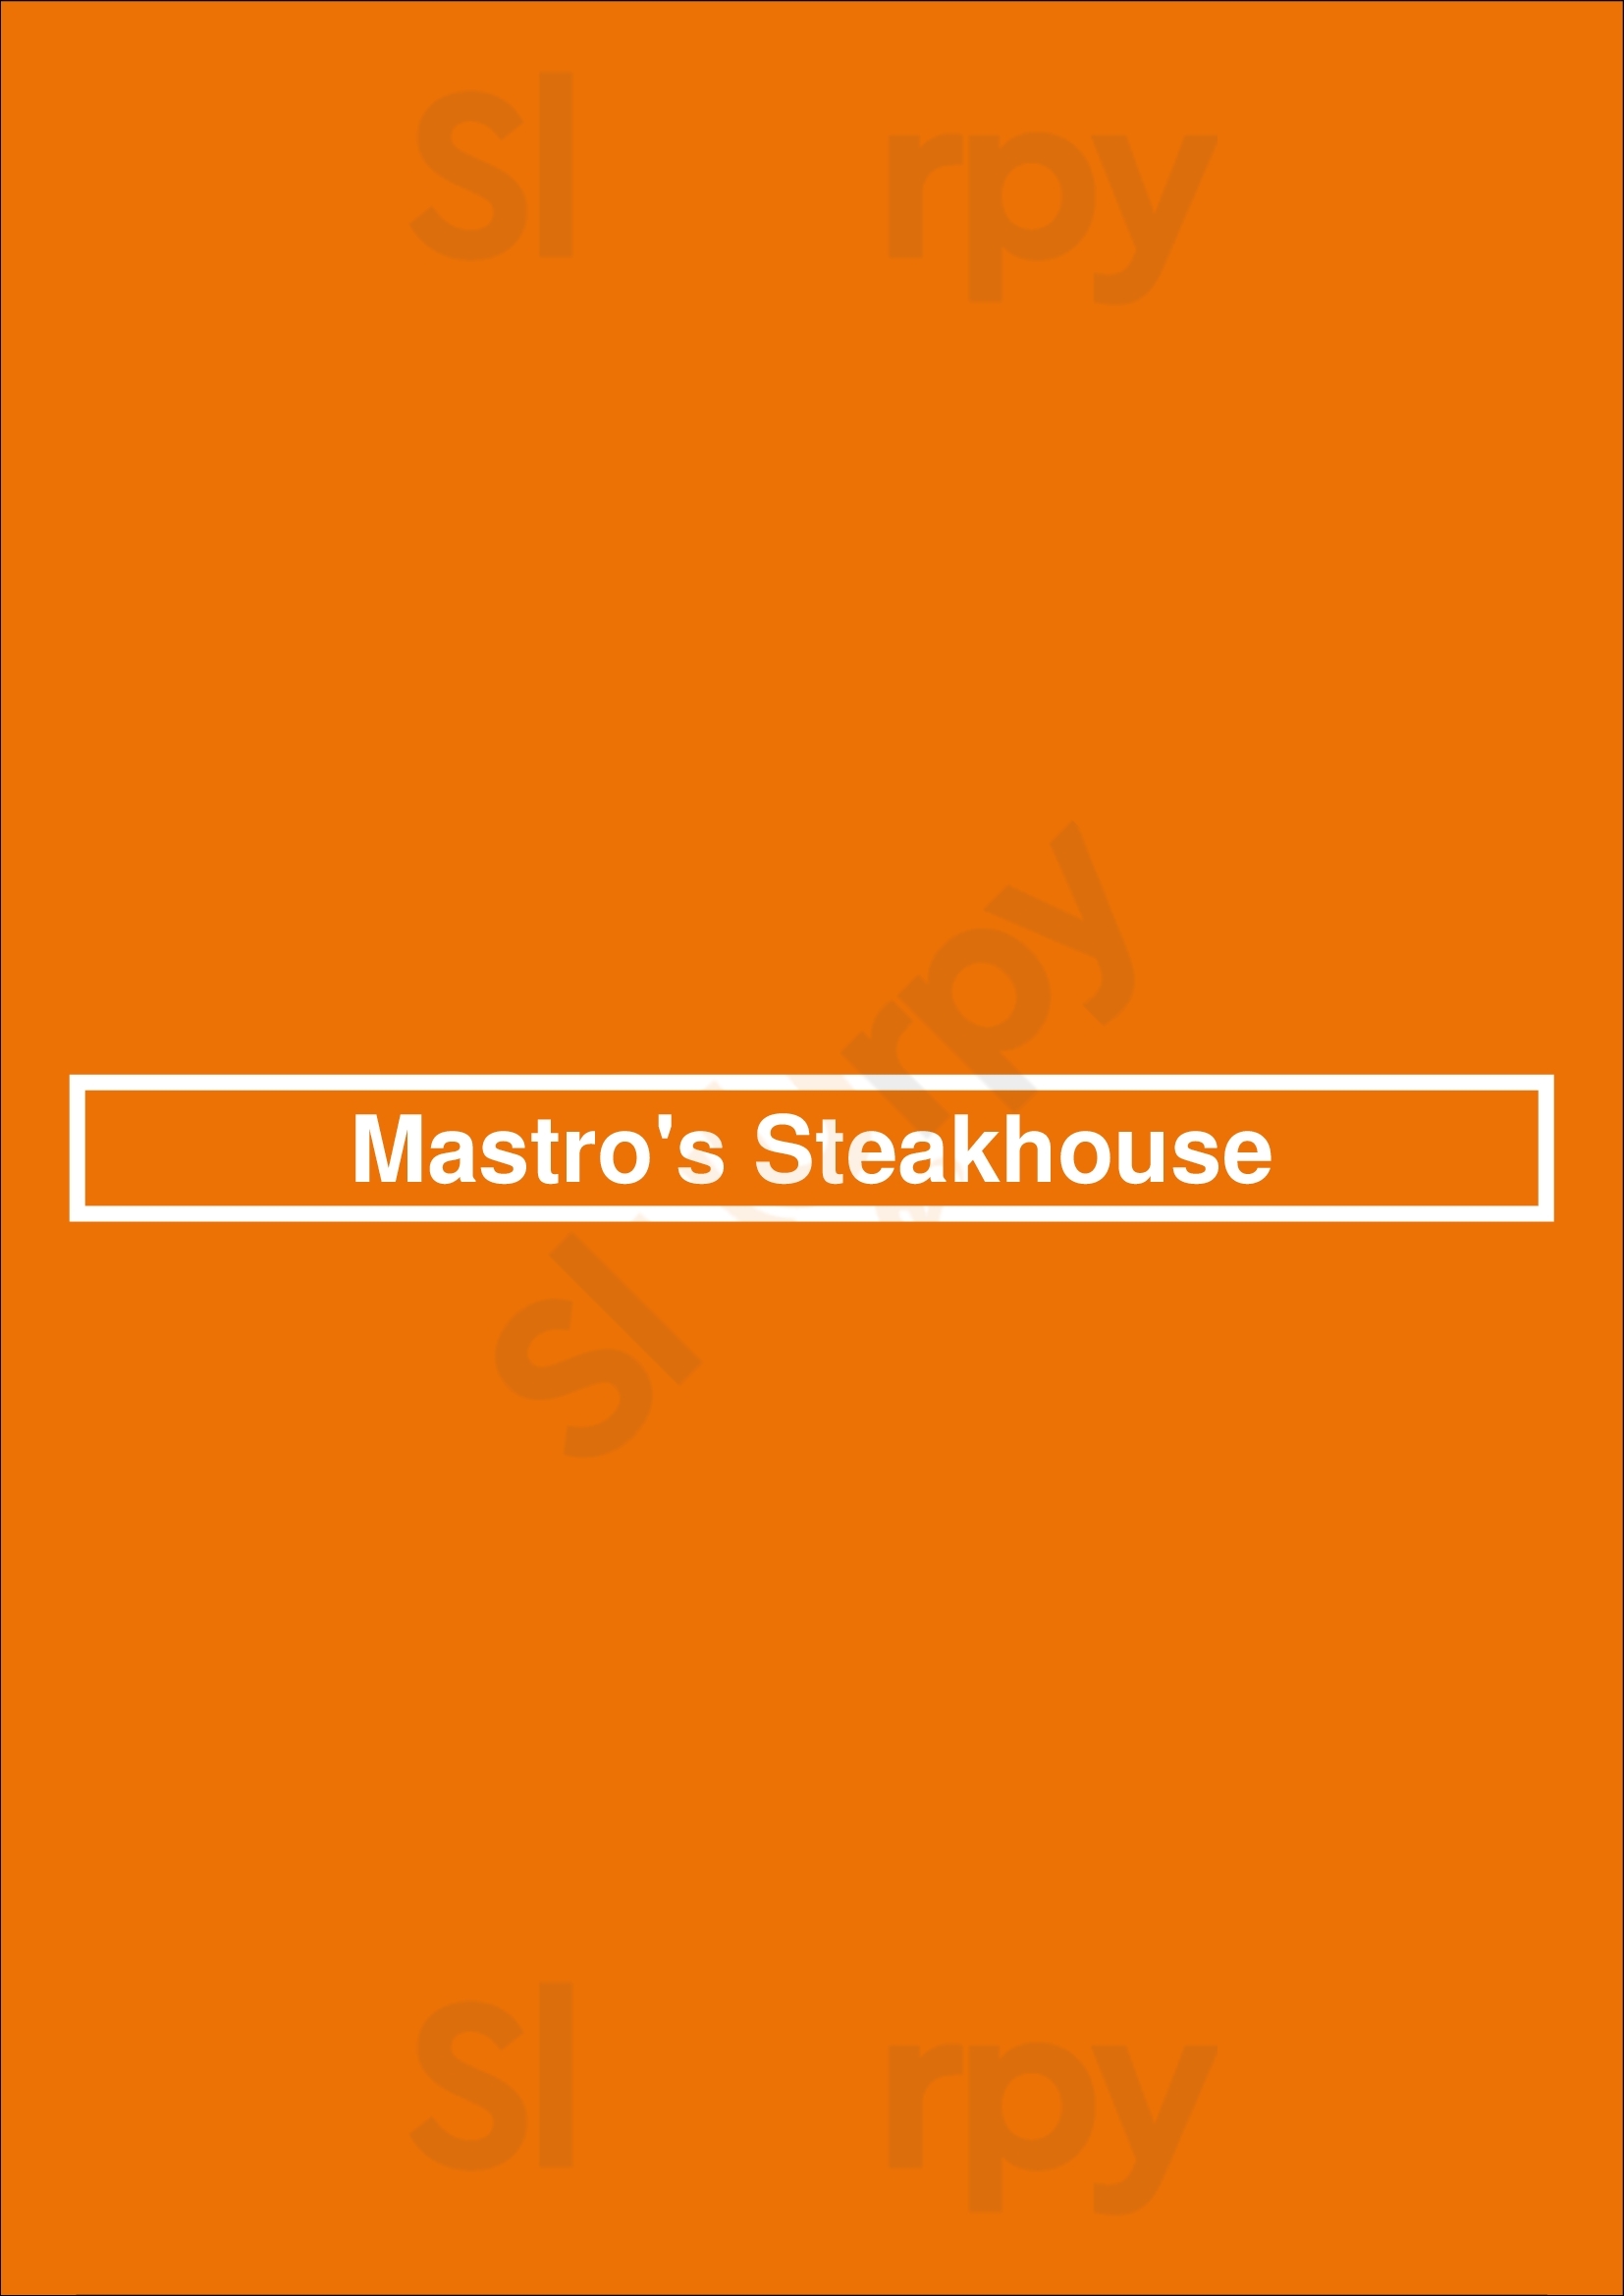 Mastro's Steakhouse Chicago Menu - 1